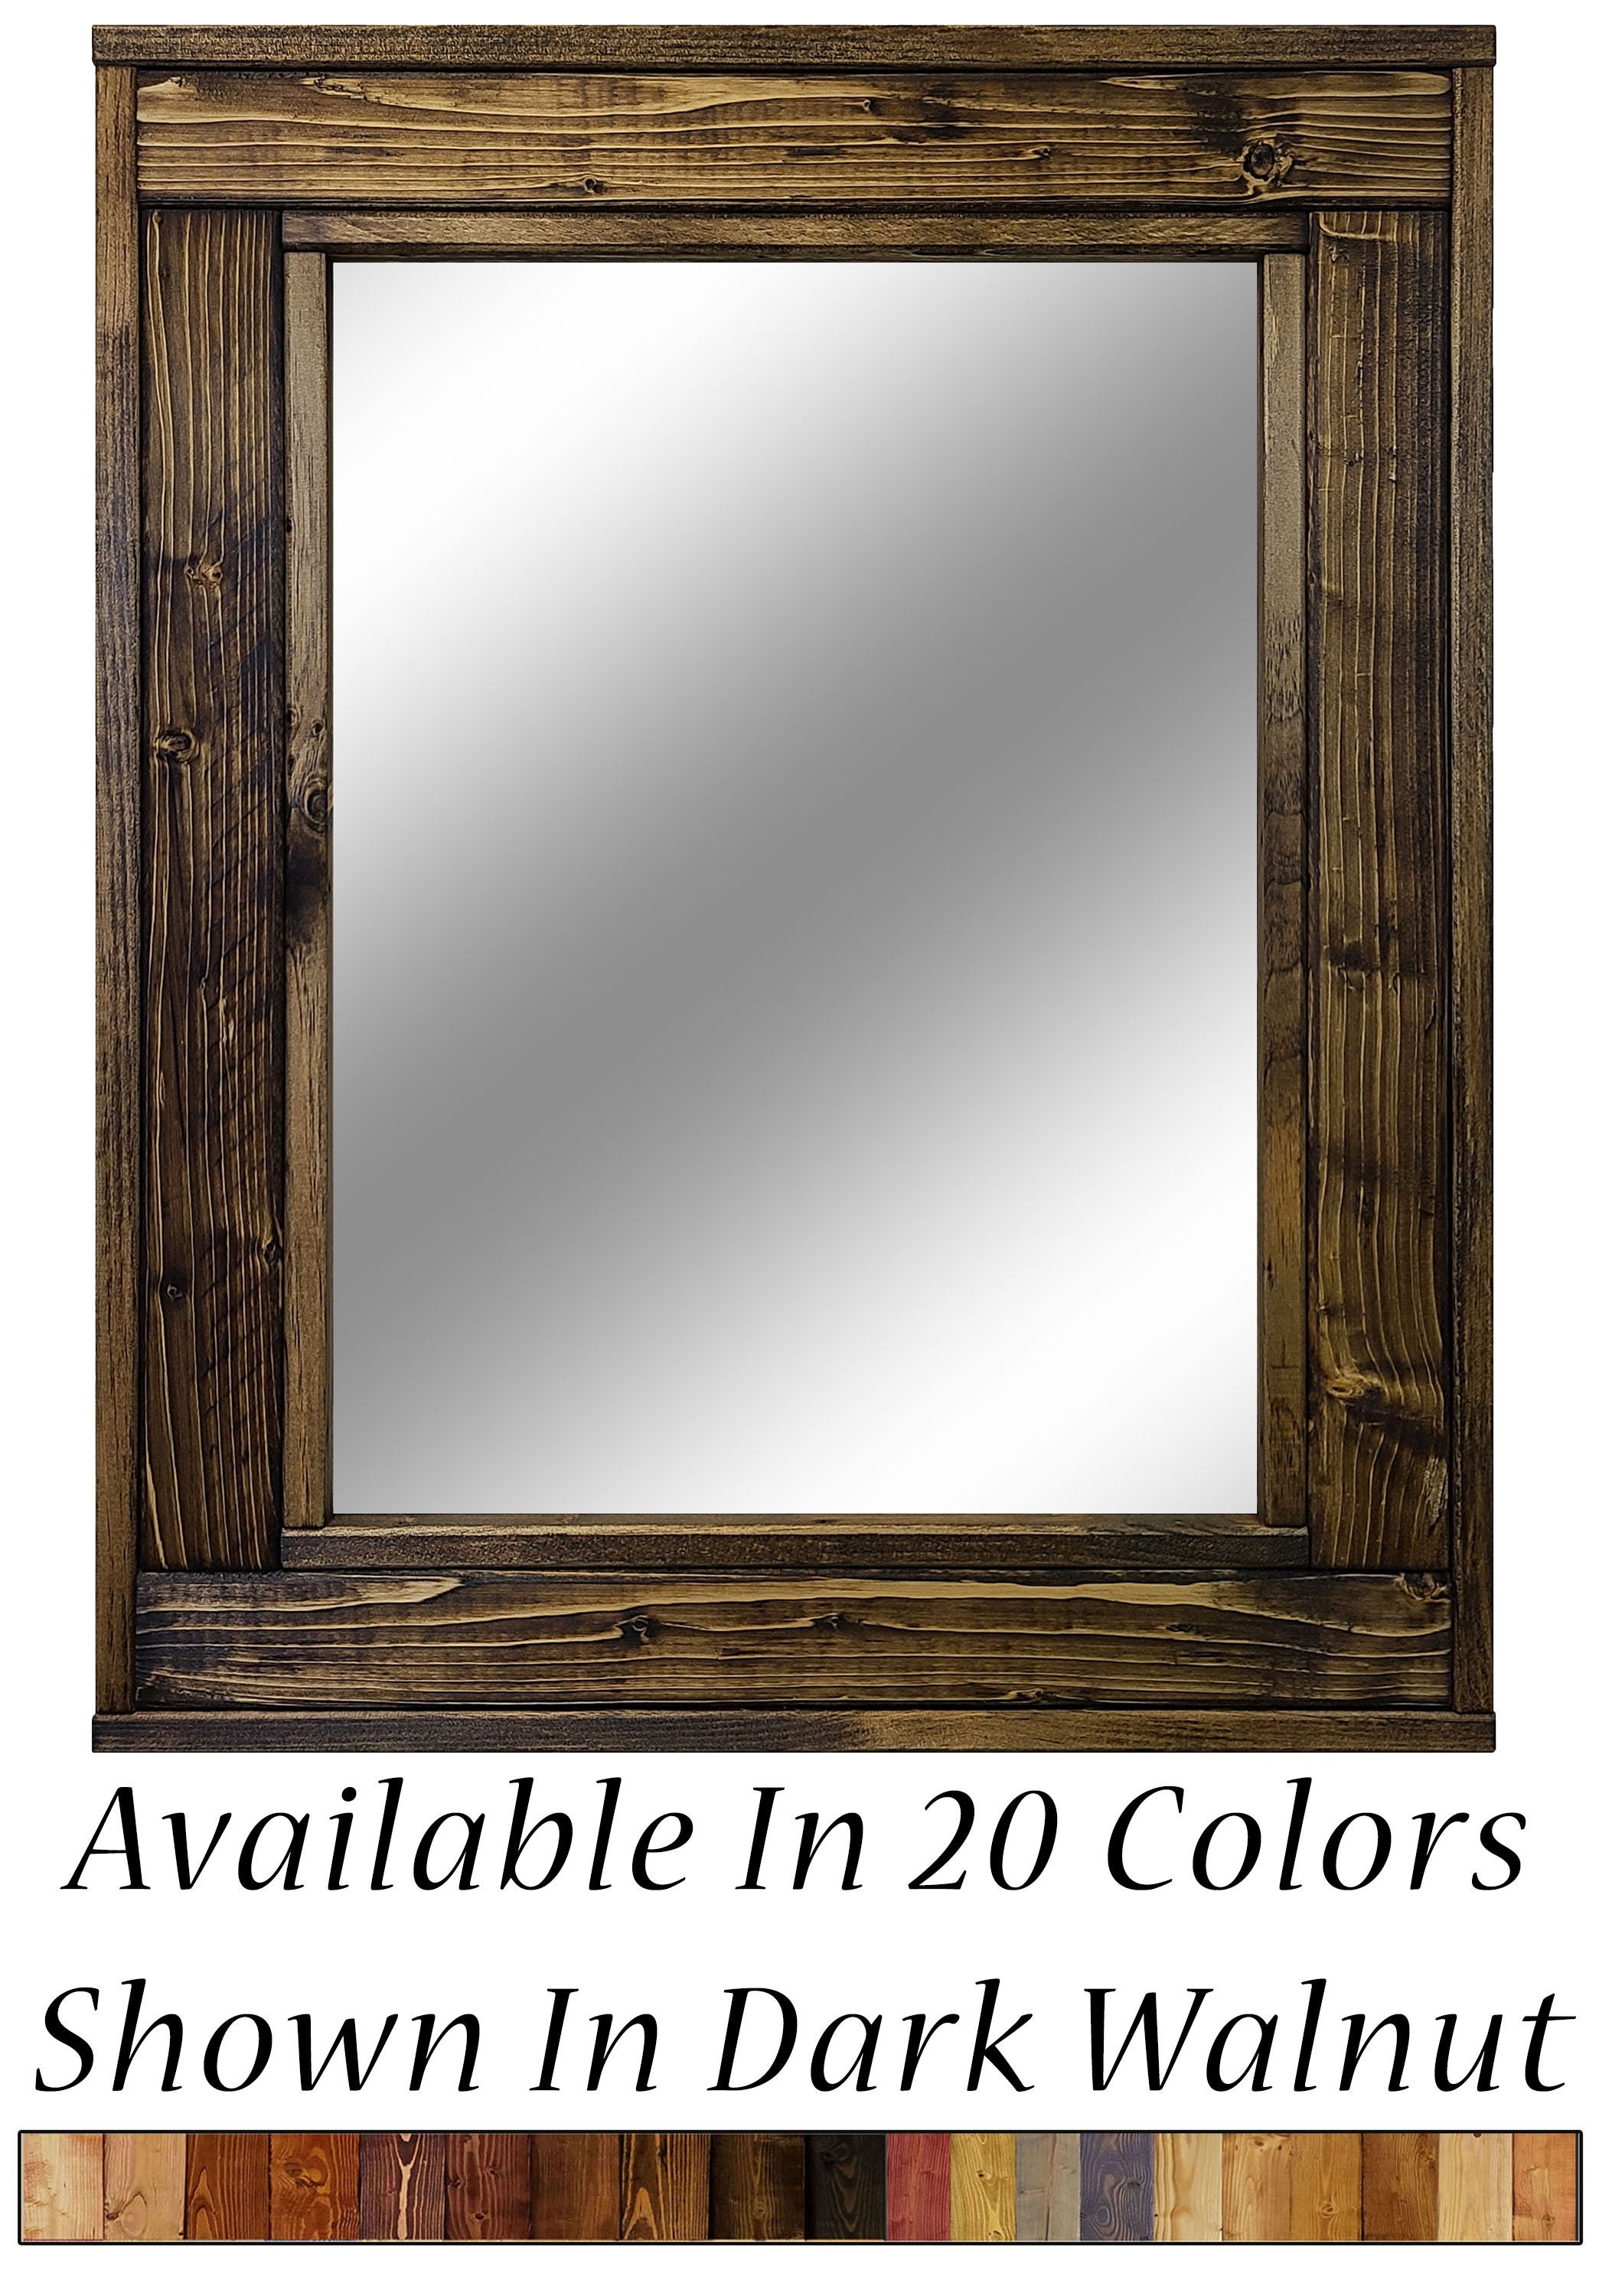 CUSTOM SIZE Made to Order Herringbone Handmade Wood Framed Mirror Made to  Order Custom Size 20 Paint Colors Custom Made Mirror 